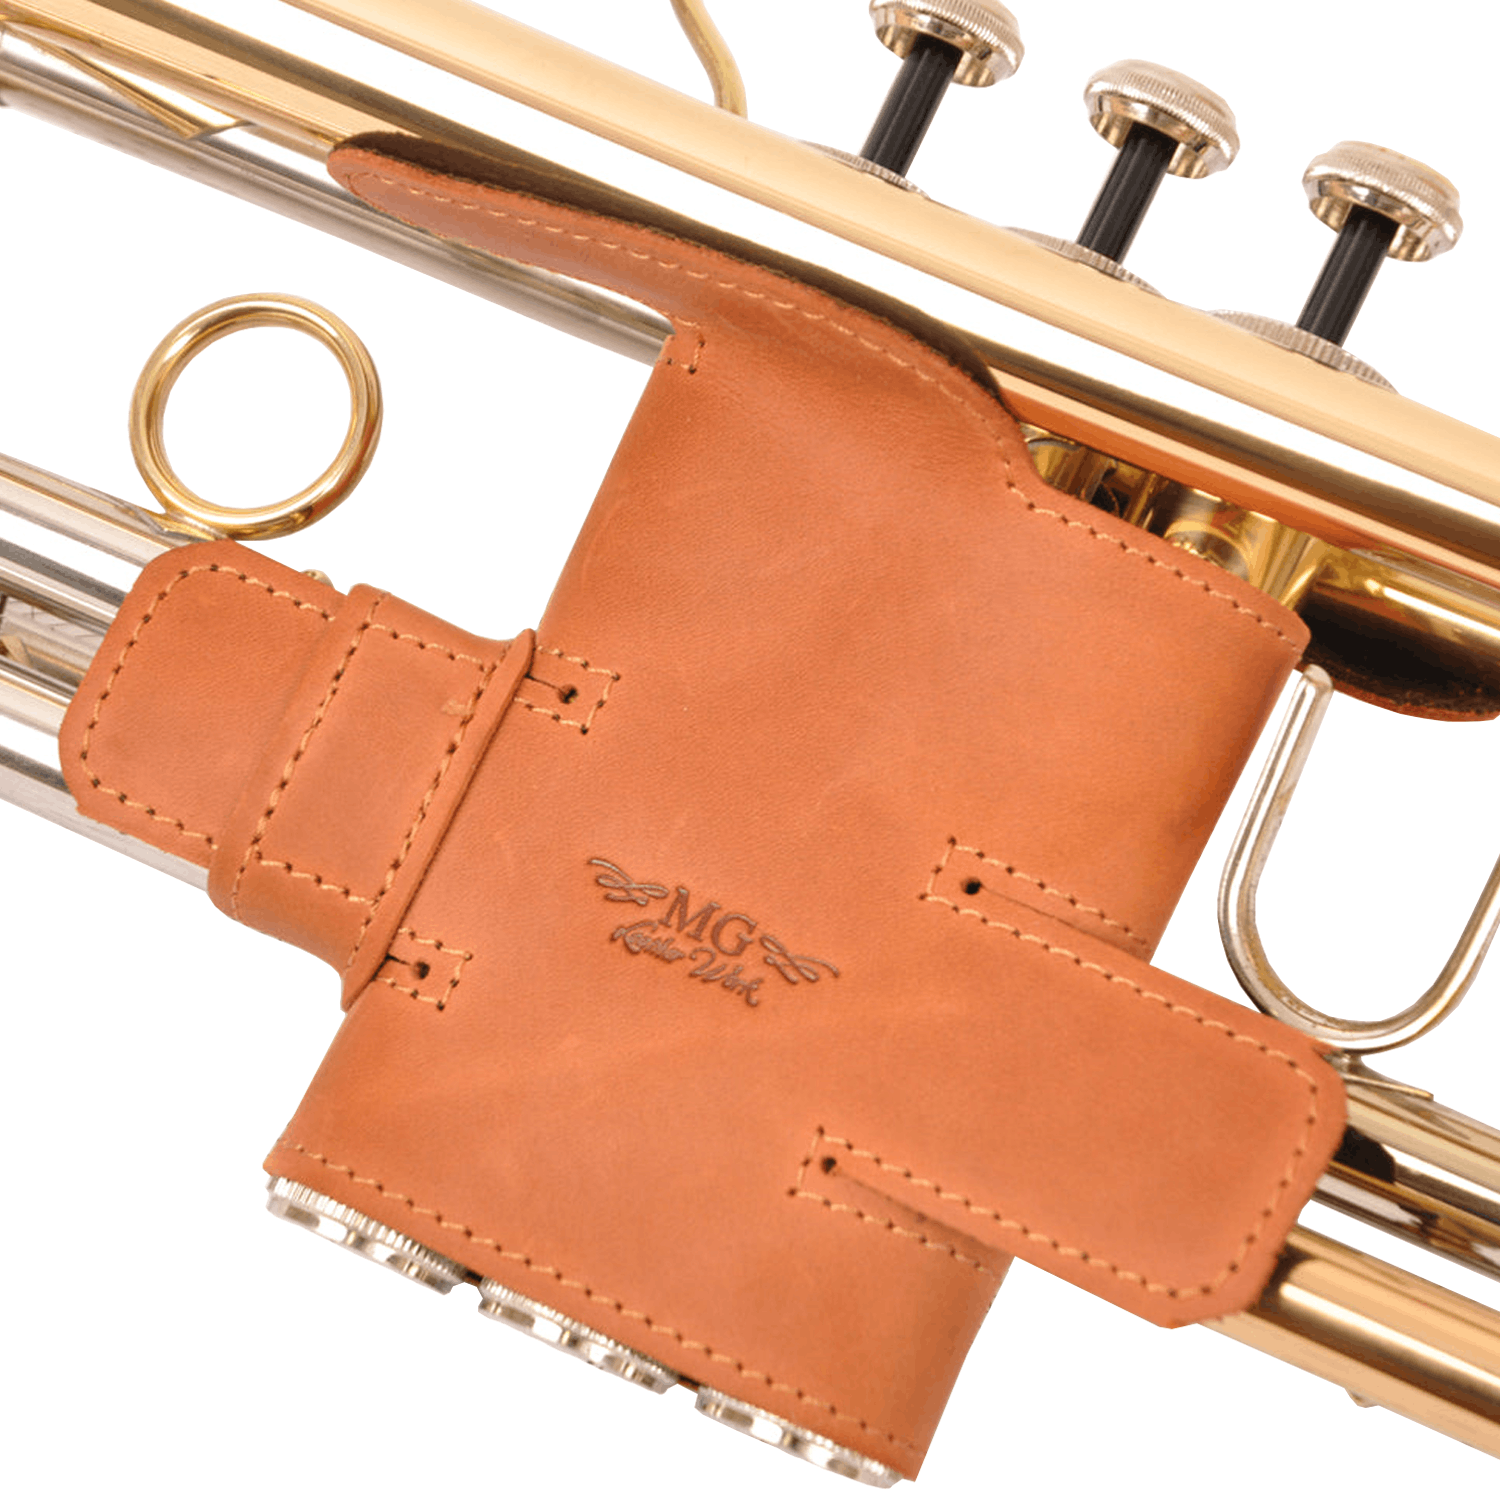 Genuine Leather Trumpet Valve Guard | Size XL